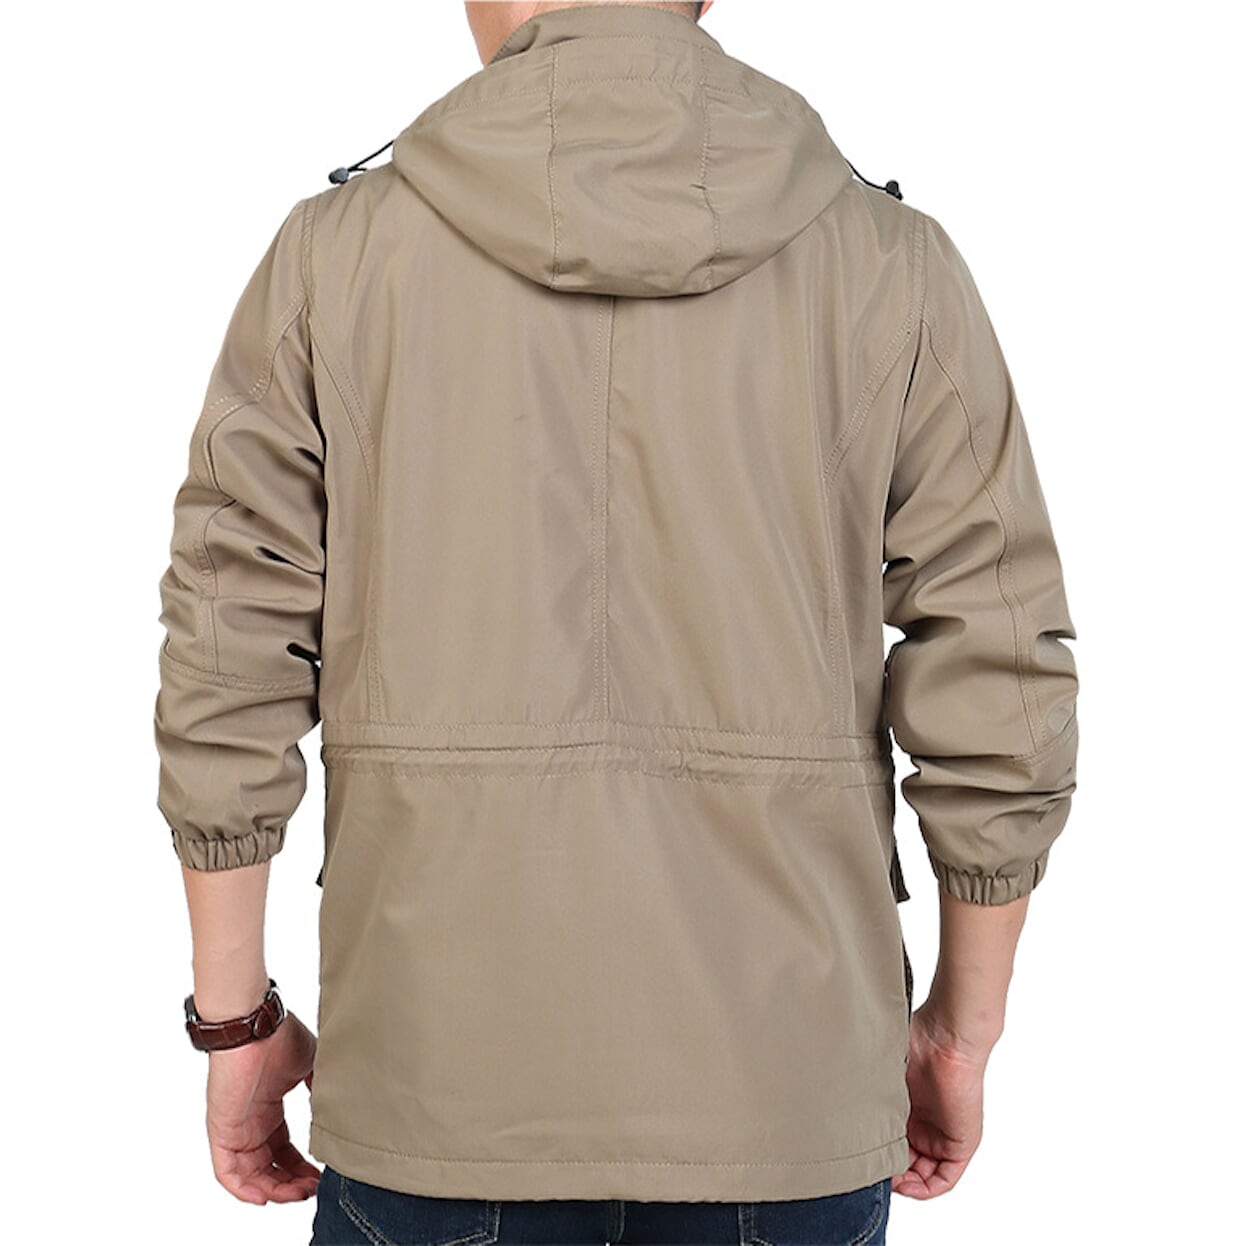 Multi Season Jacket with Removable Hood